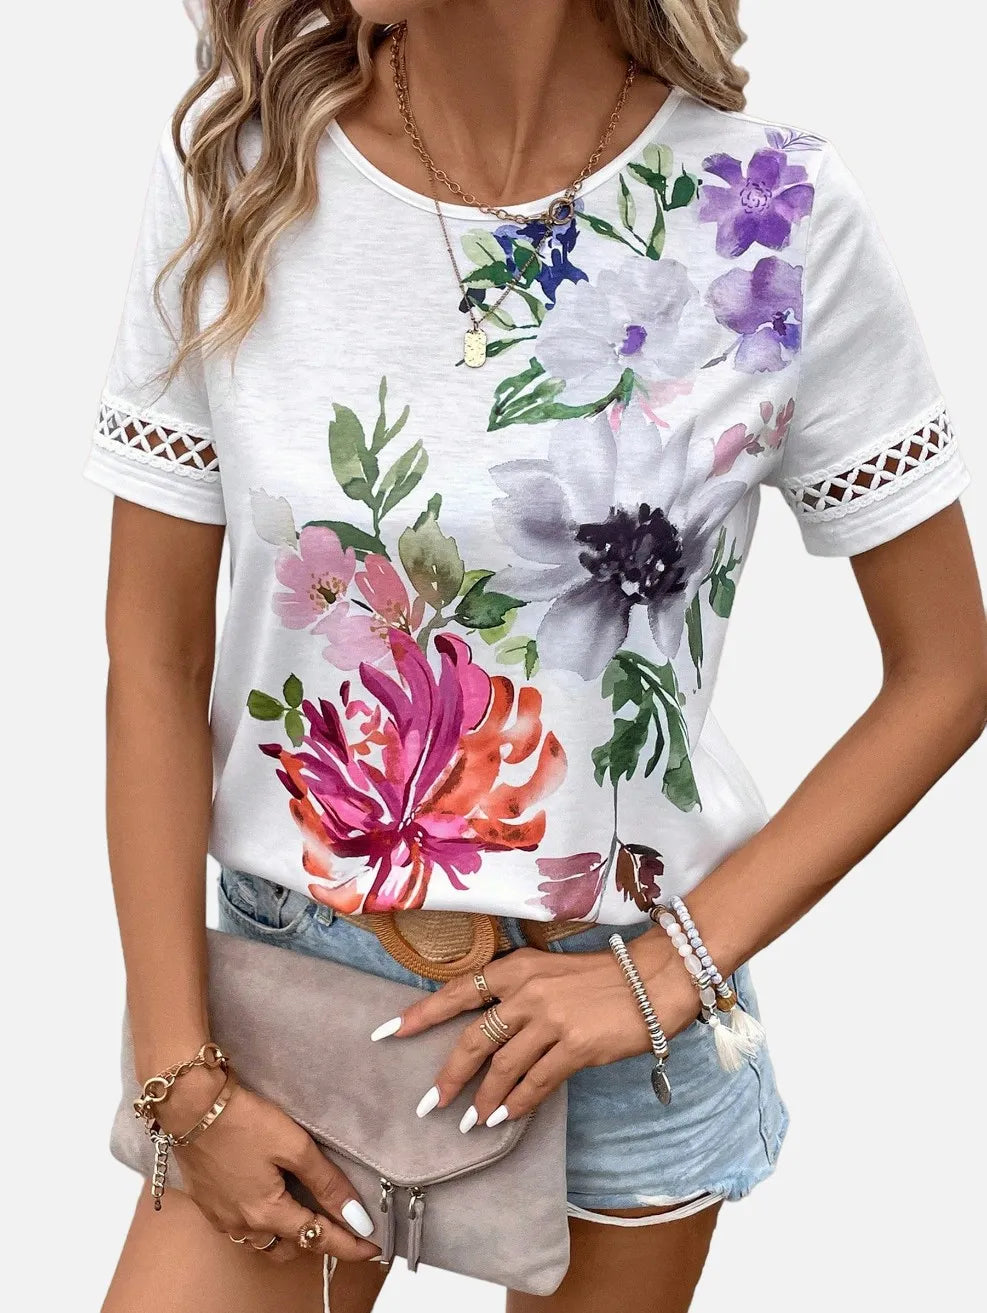 Camiseta Manga Curta com Renda e Estampa Floral